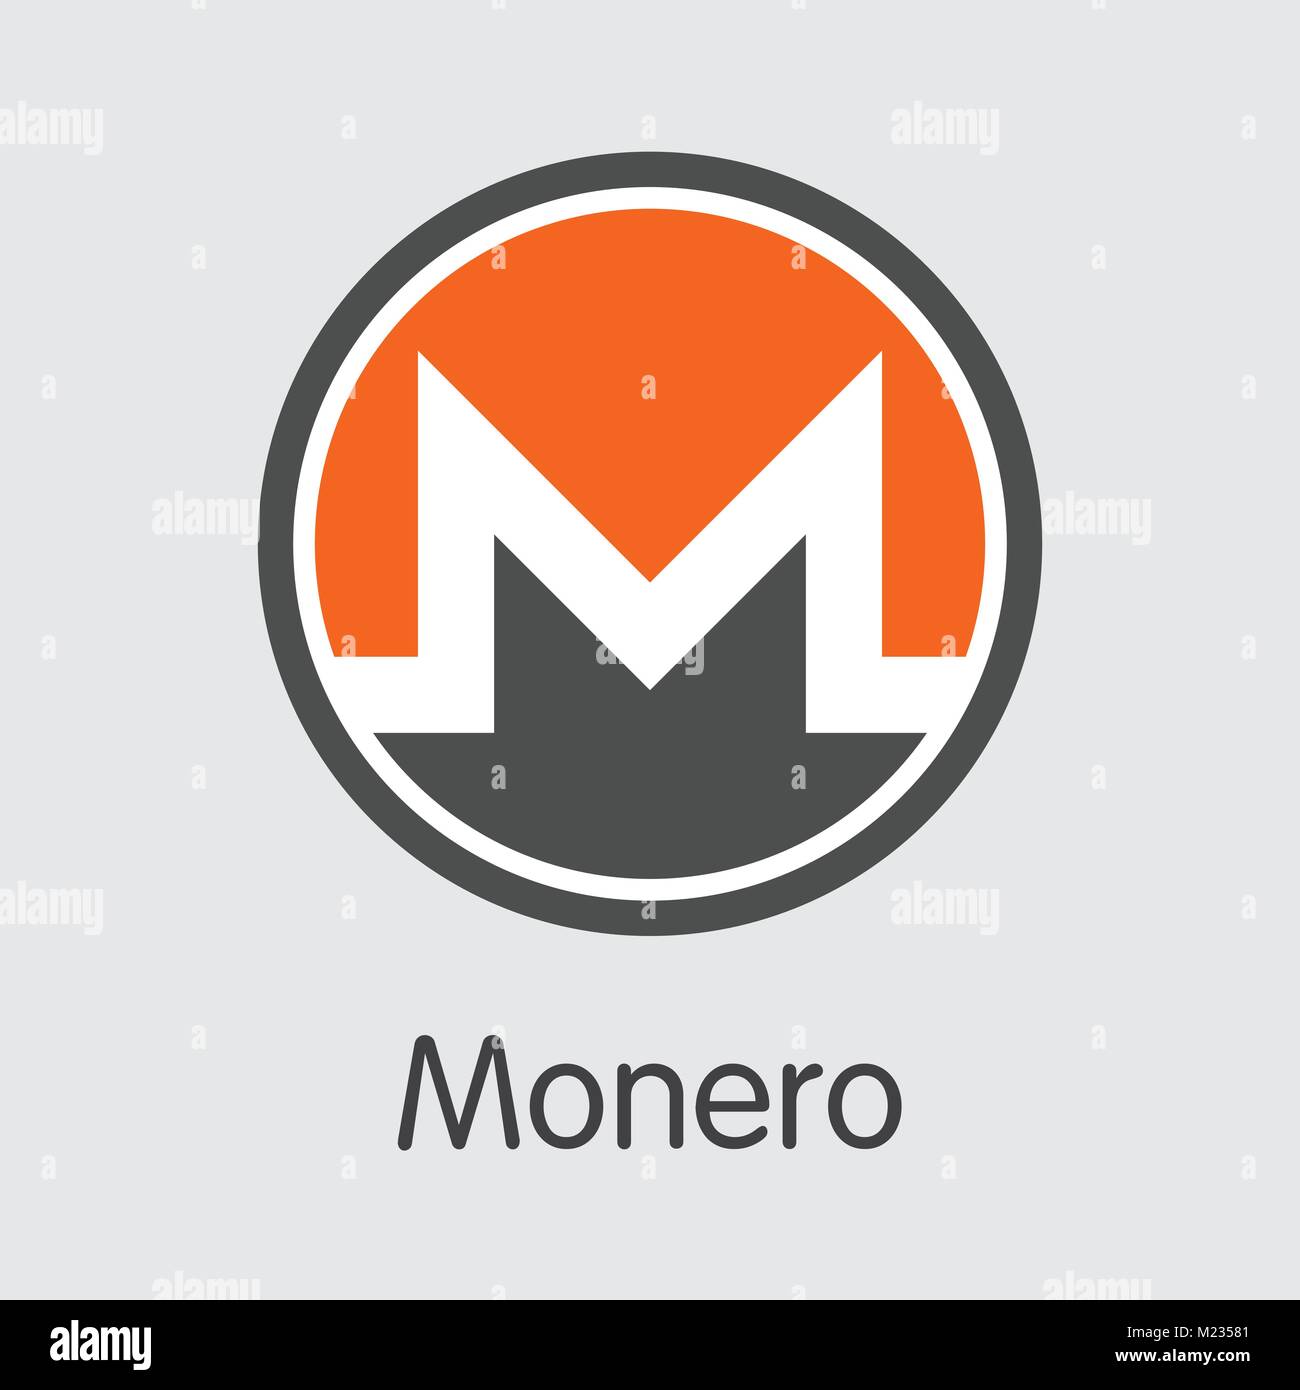 Moreno crypto currency wotleto yandexpay net отзывы